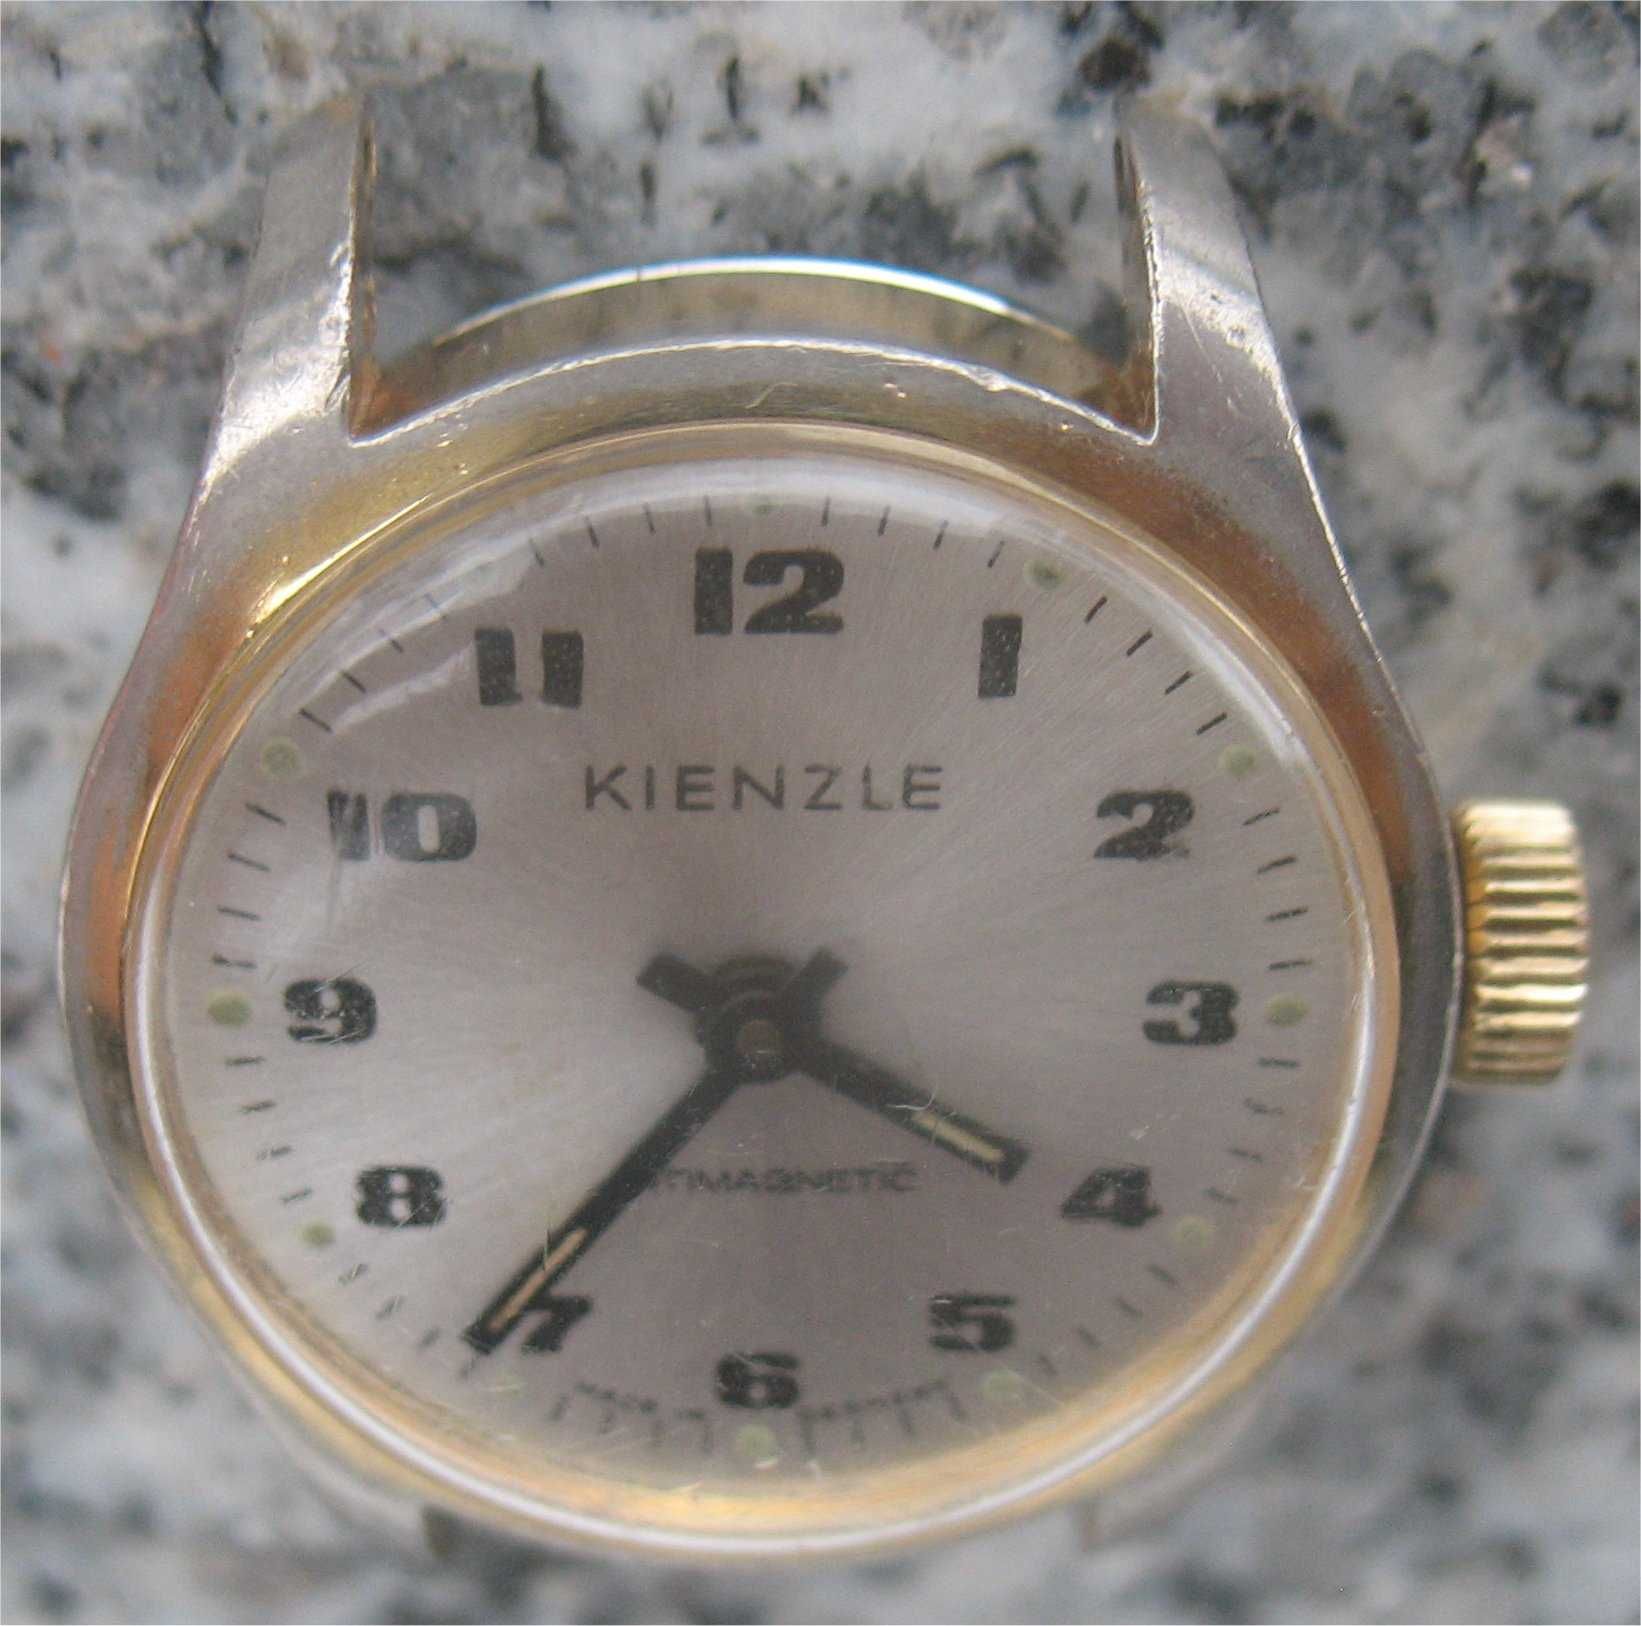 Kienzle - Antimagnetic - Vintage de Corda - Senhora